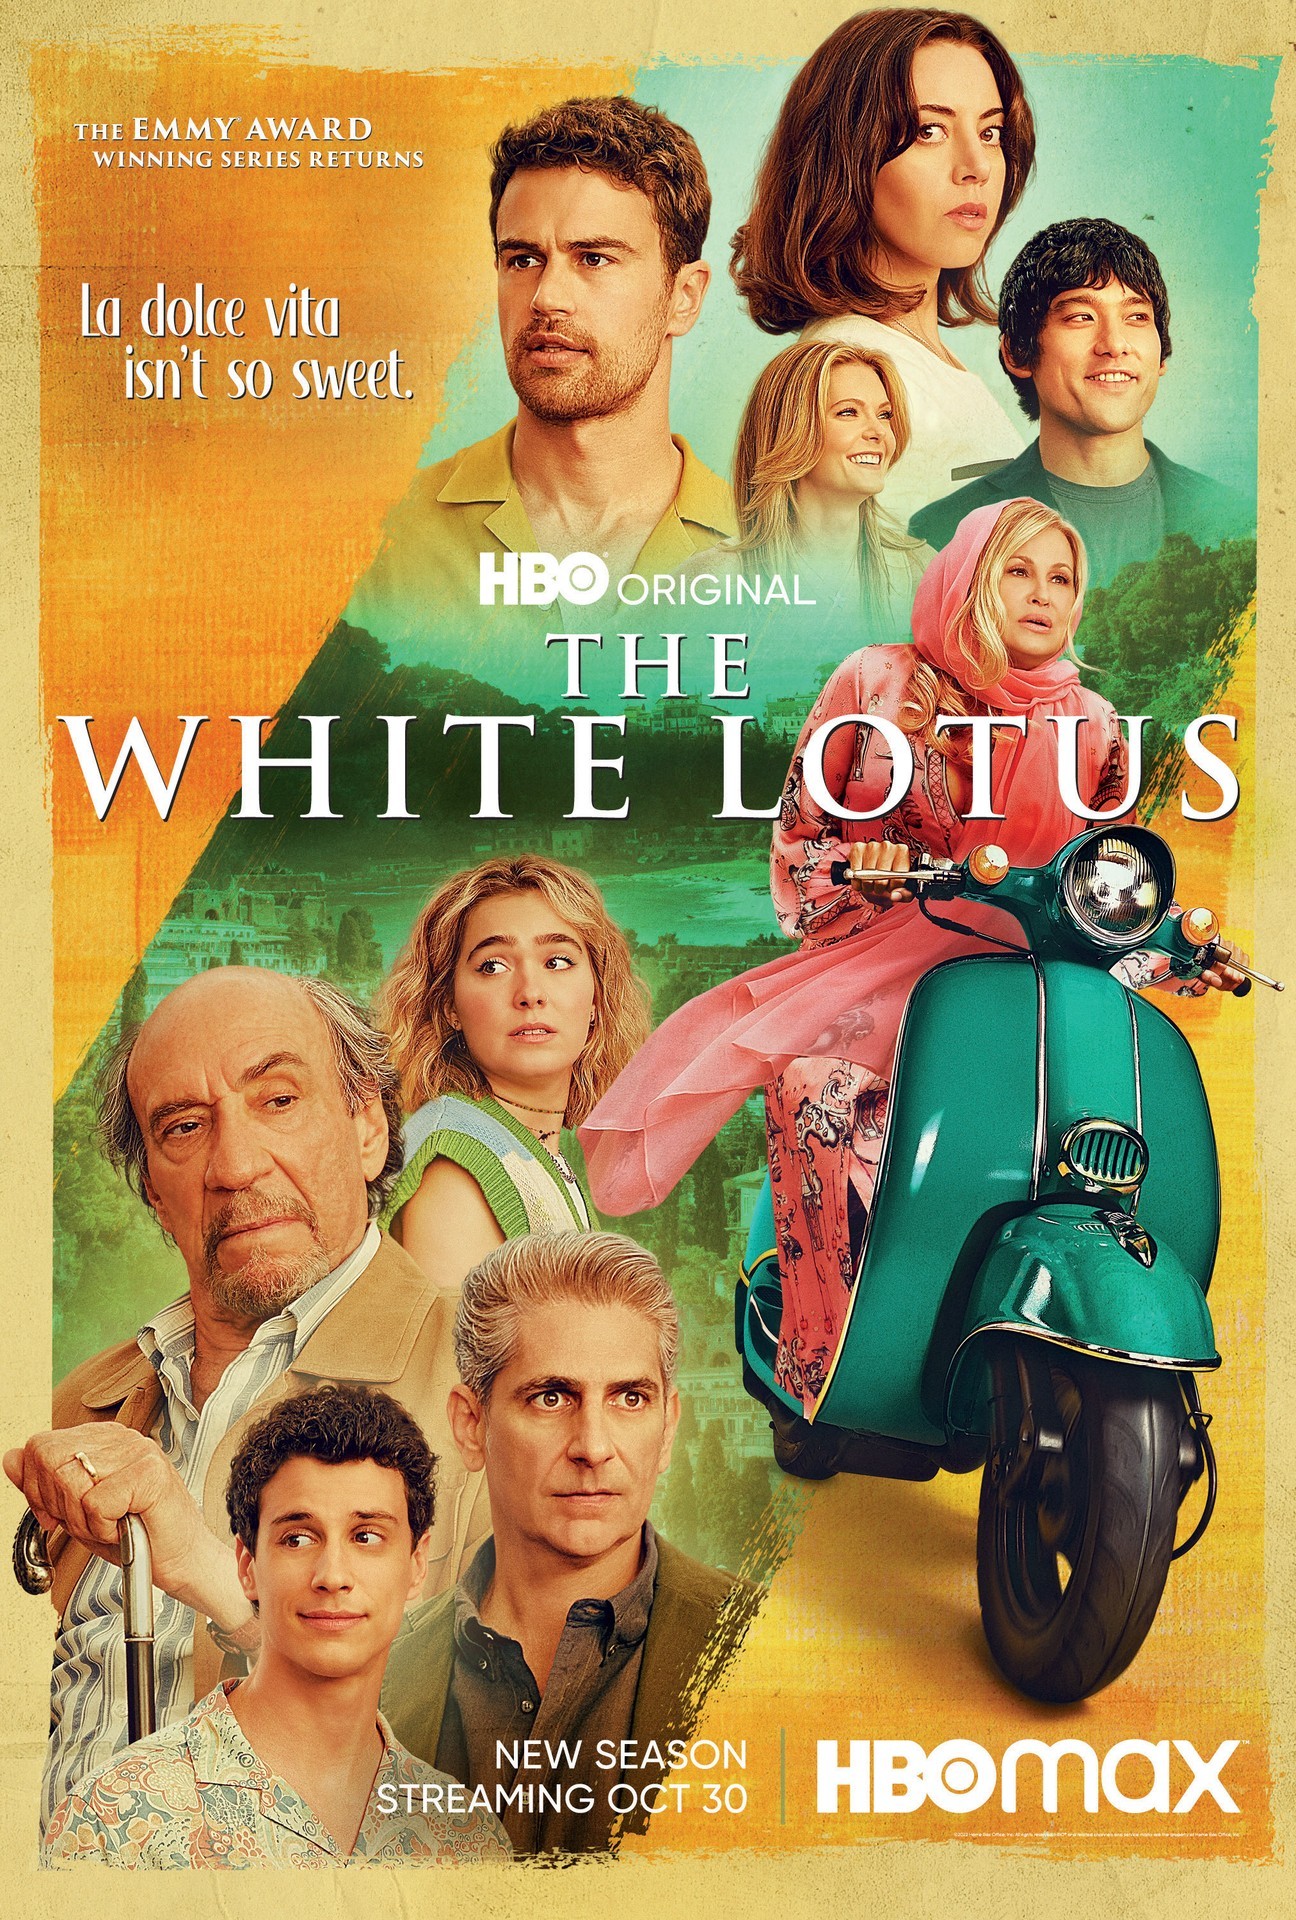 White Chicks - Rotten Tomatoes